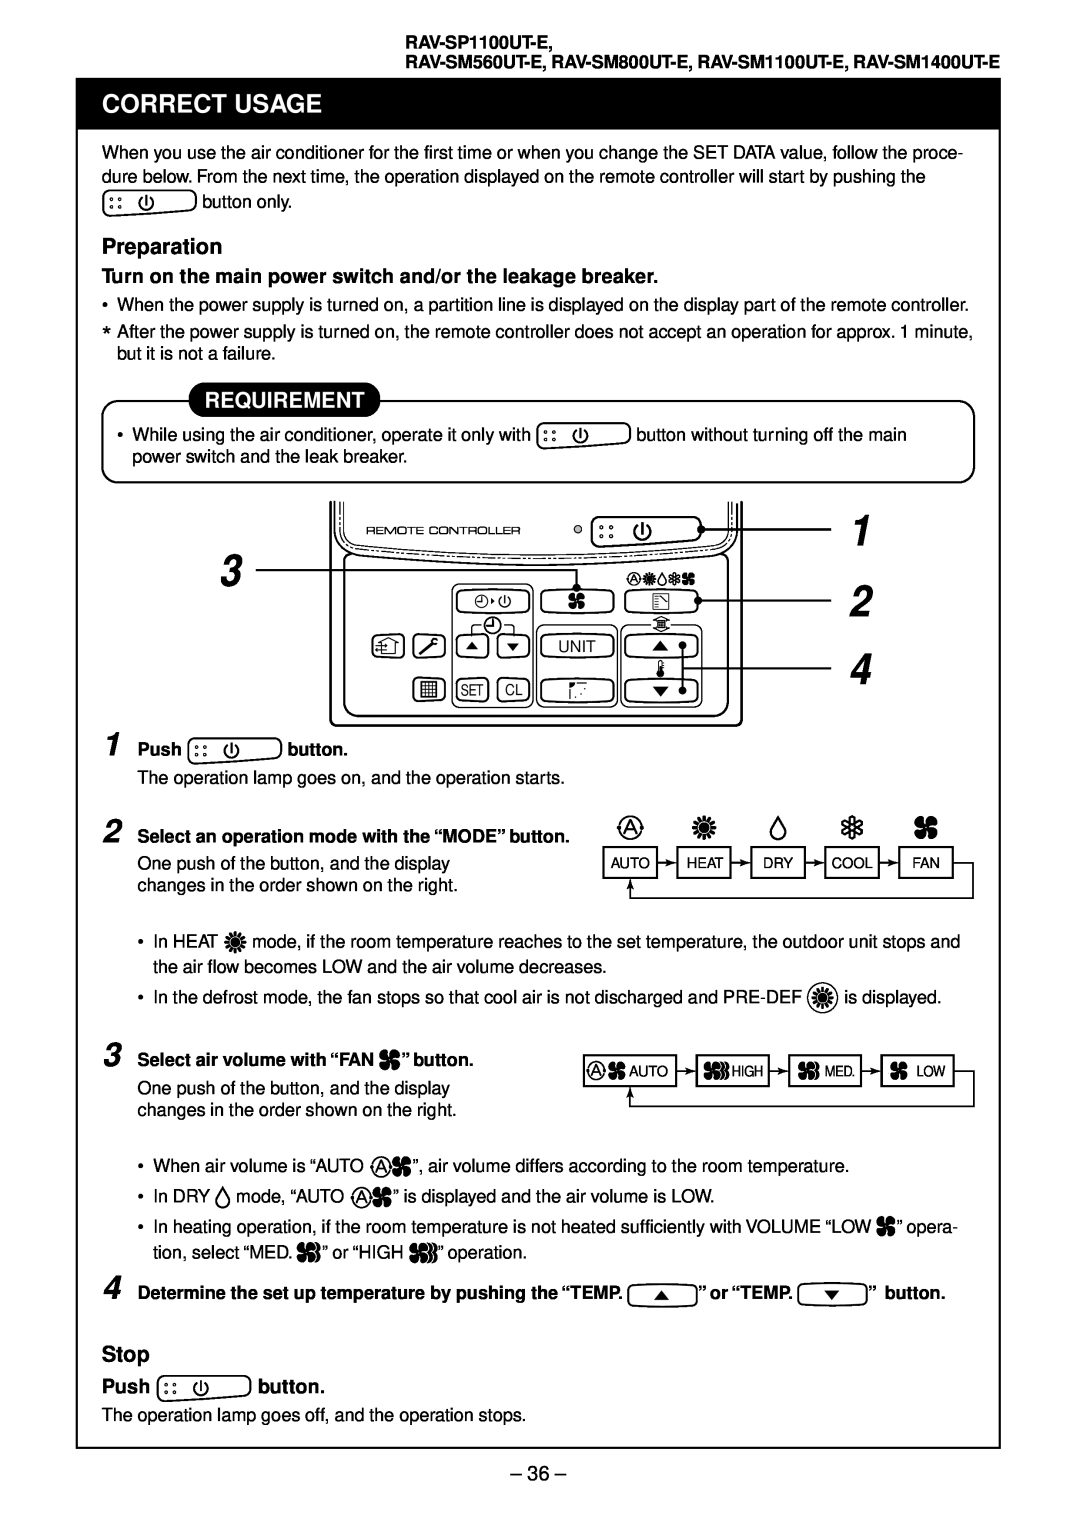 Toshiba RAV-SM1101AT-E, RAV-SM1401AT-E Correct Usage, Preparation, Requirement, Stop, Push button, RAV-SP1100UT-E 